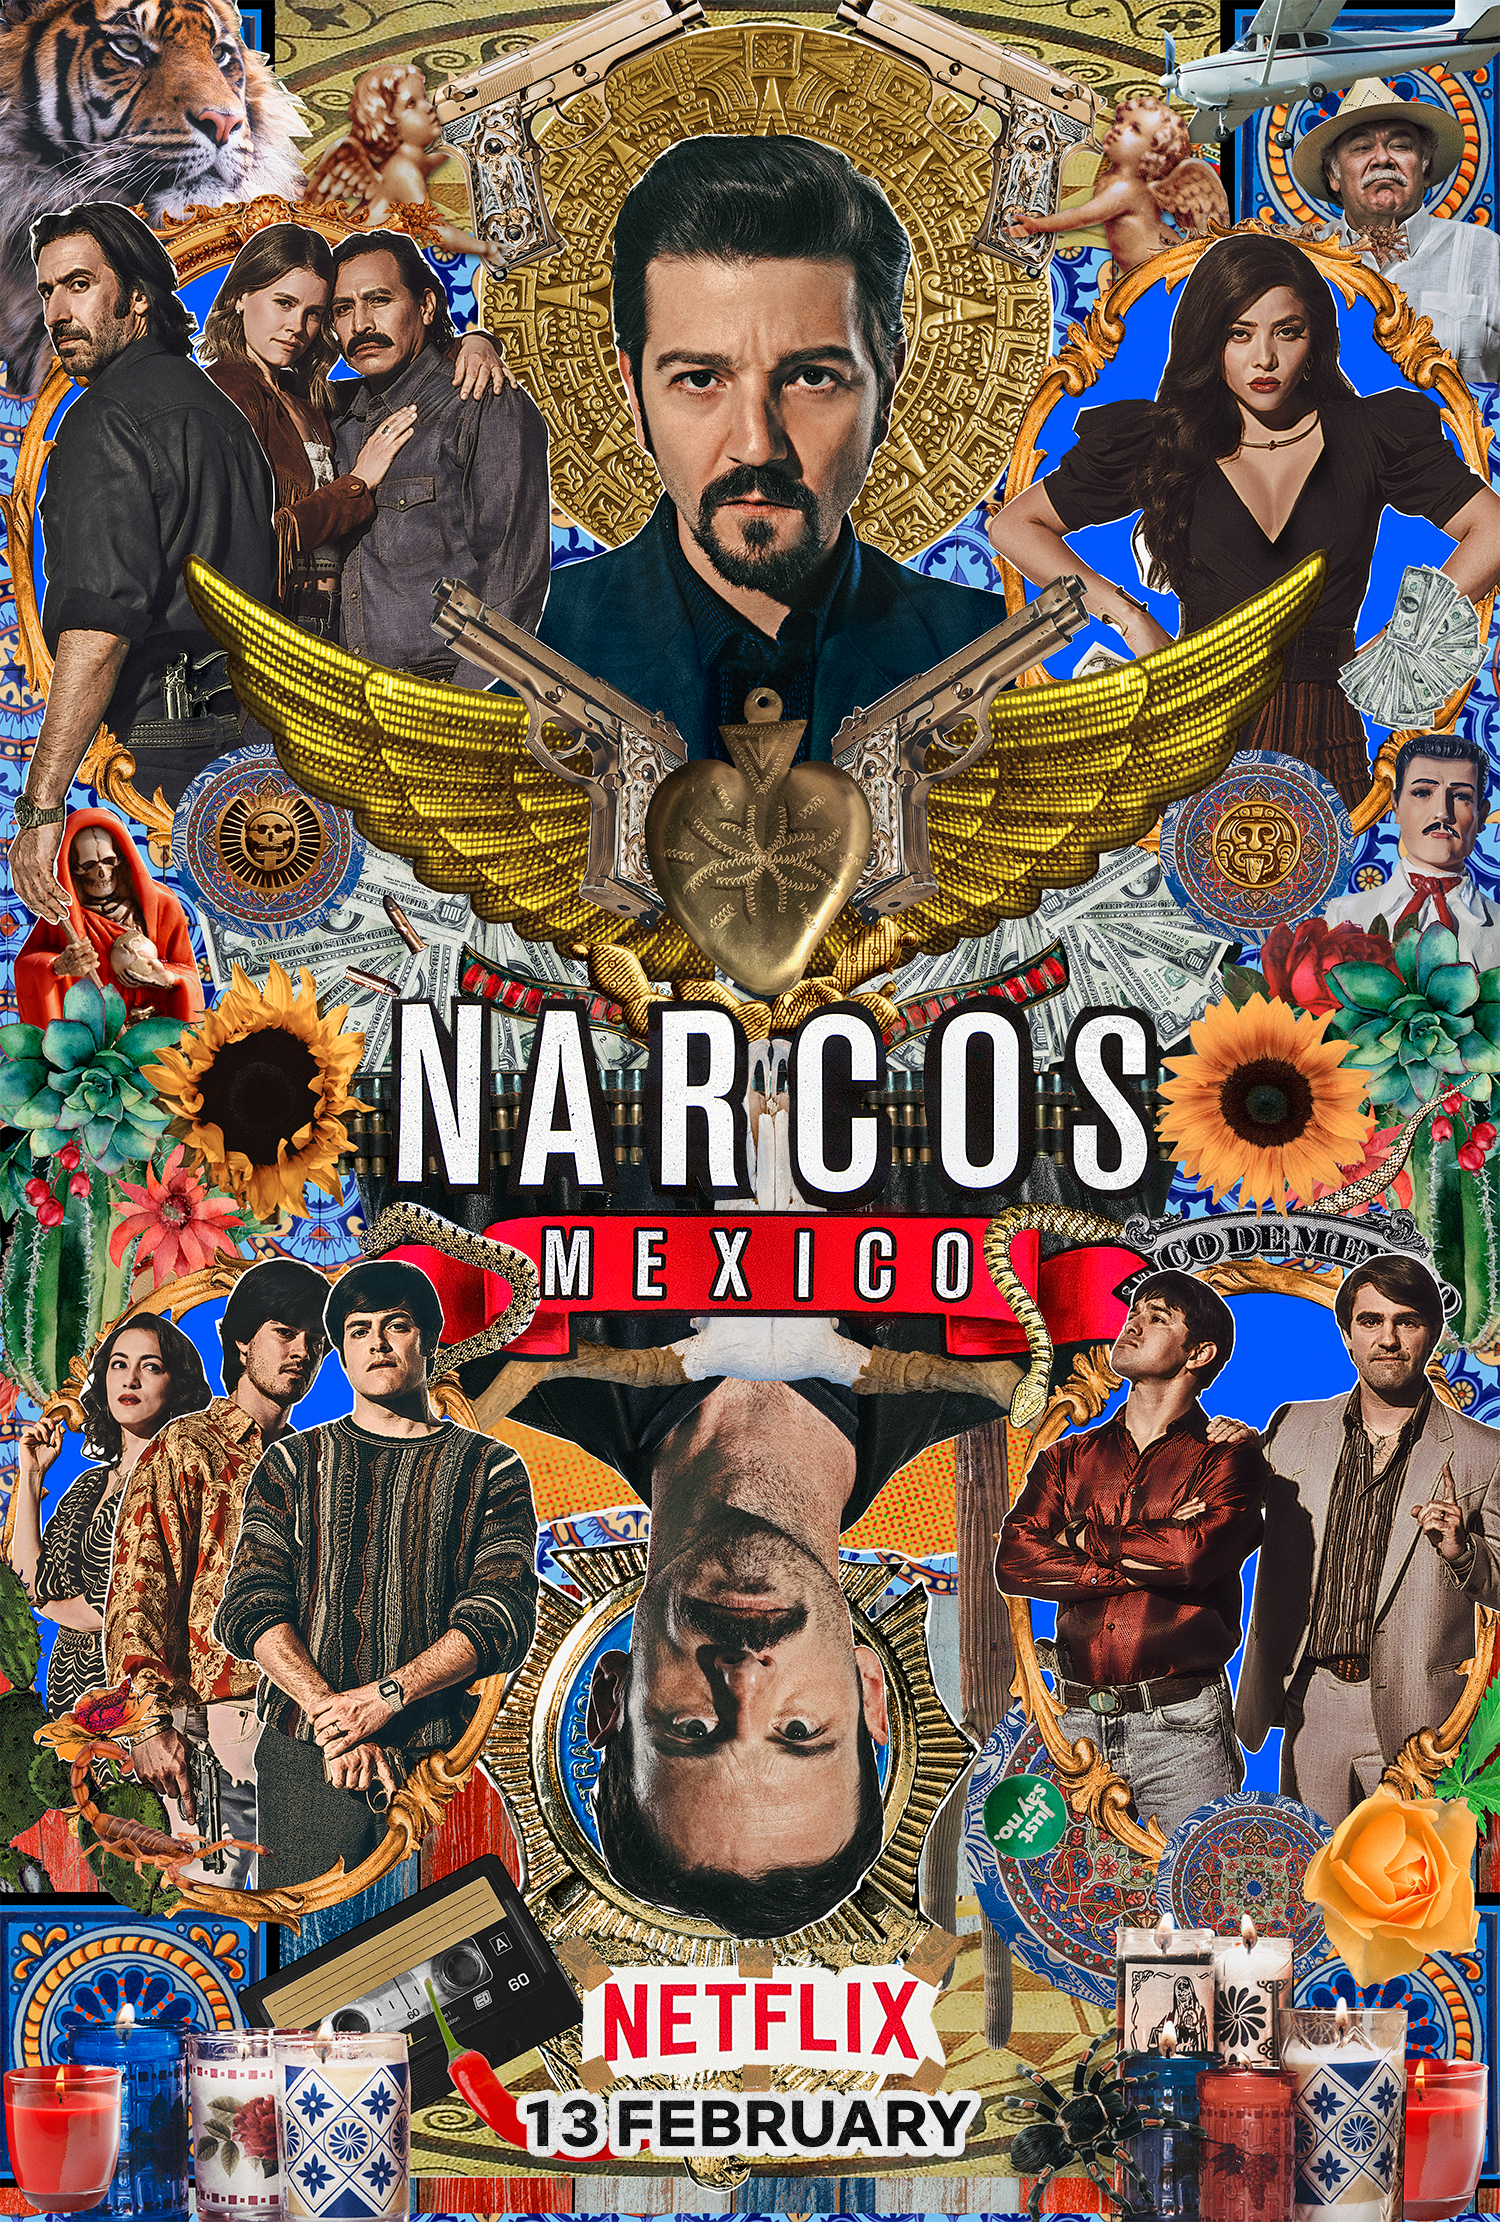 Stiahni si Seriál Narcos: Mexiko / Narcos: Mexico S01E09 (CZ)[WebRip][1080p] = CSFD 86%